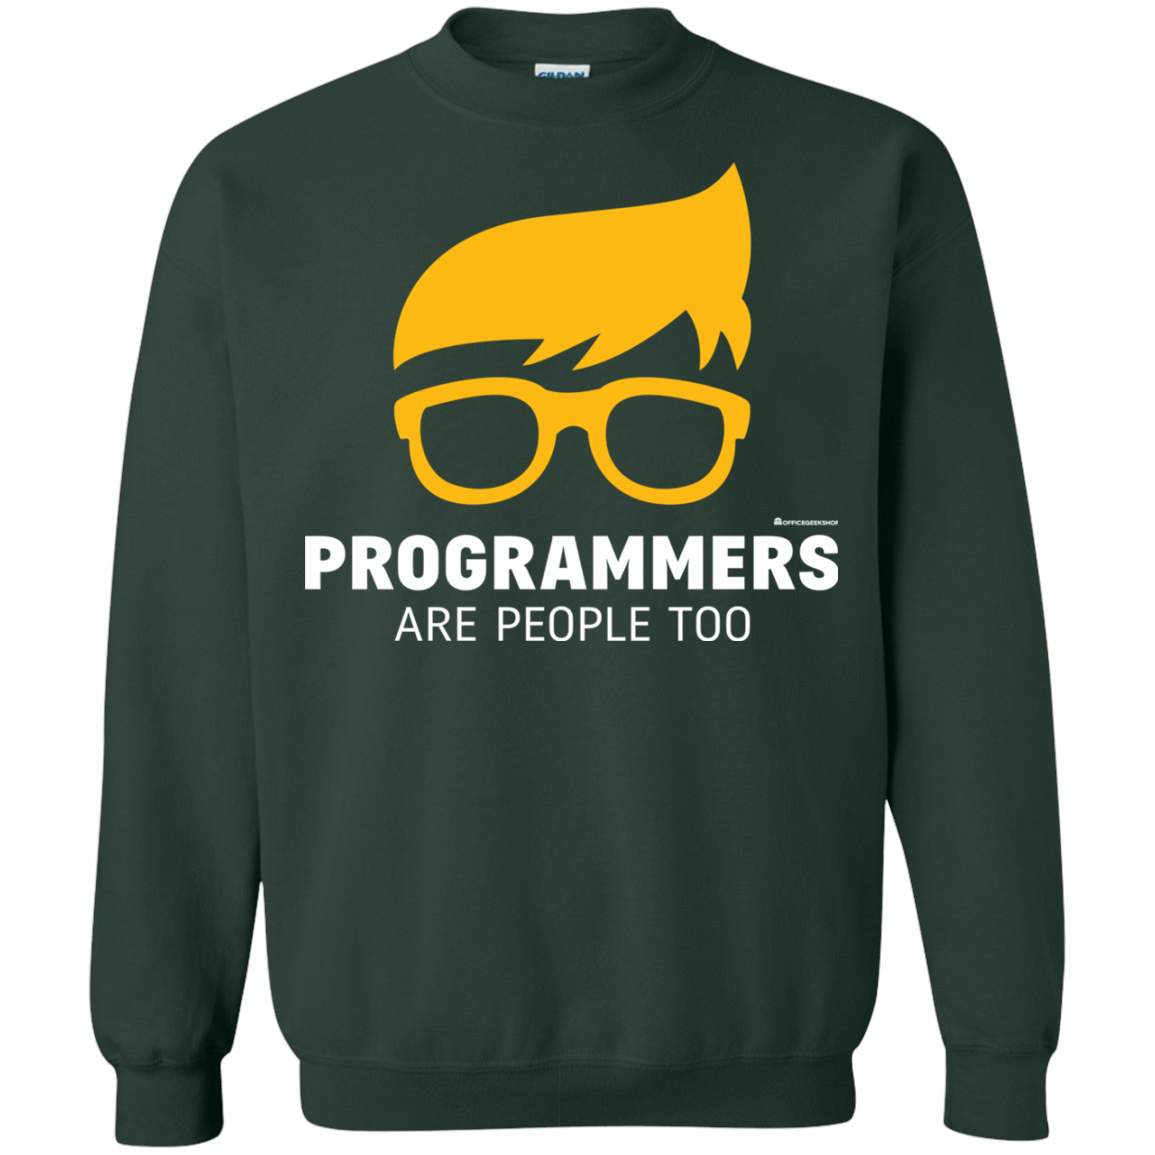 Sweatshirts Forest Green / Small Programmers Are People Too Crewneck Sweatshirt